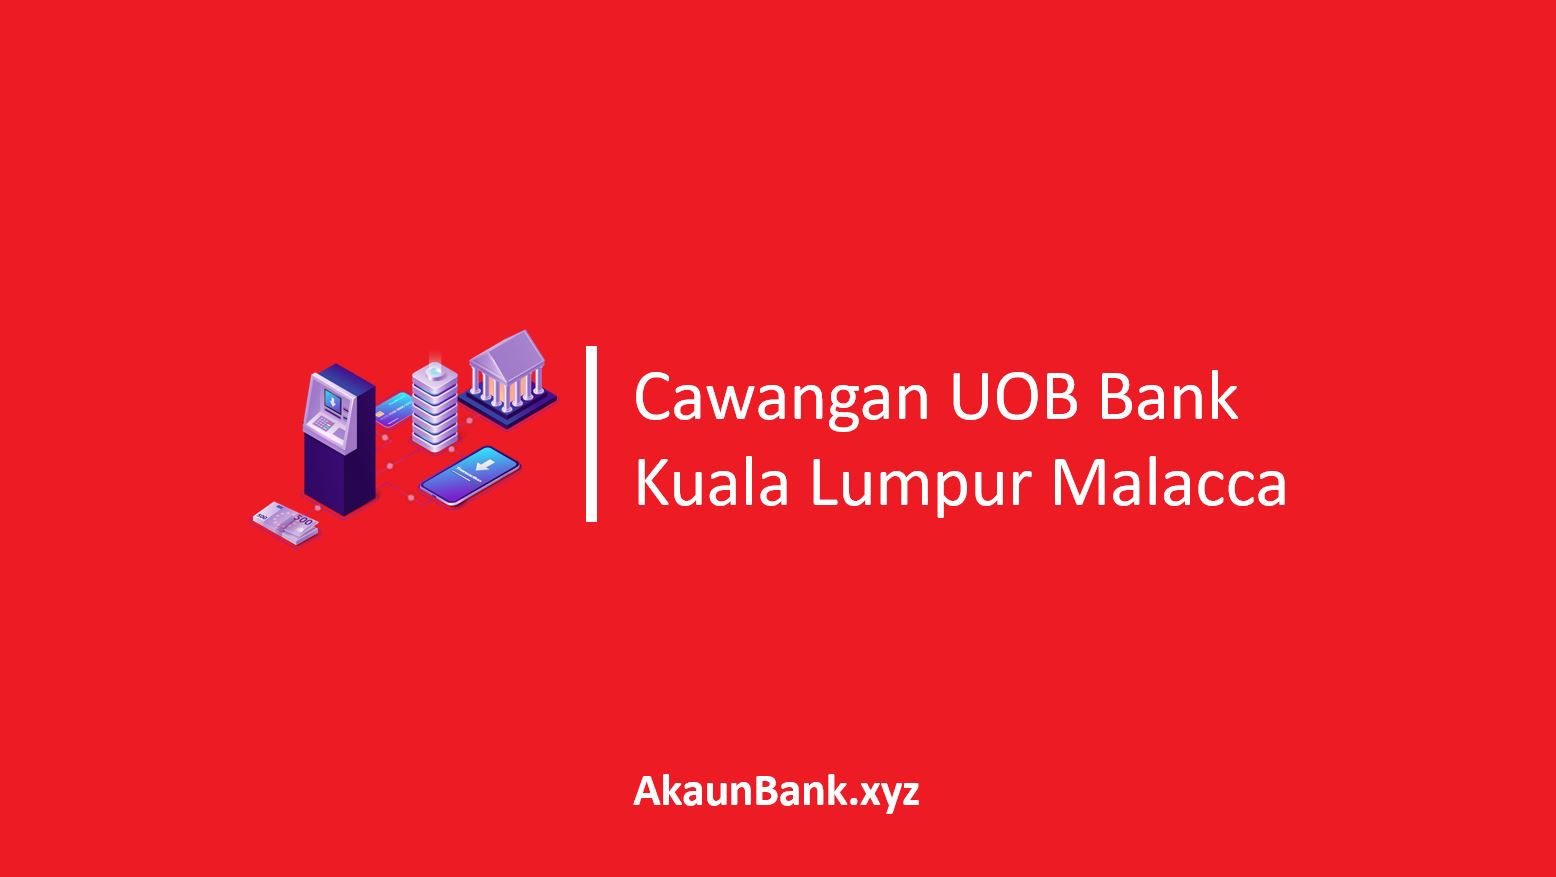 Cawangan UOB Bank Kuala Lumpur Malacca